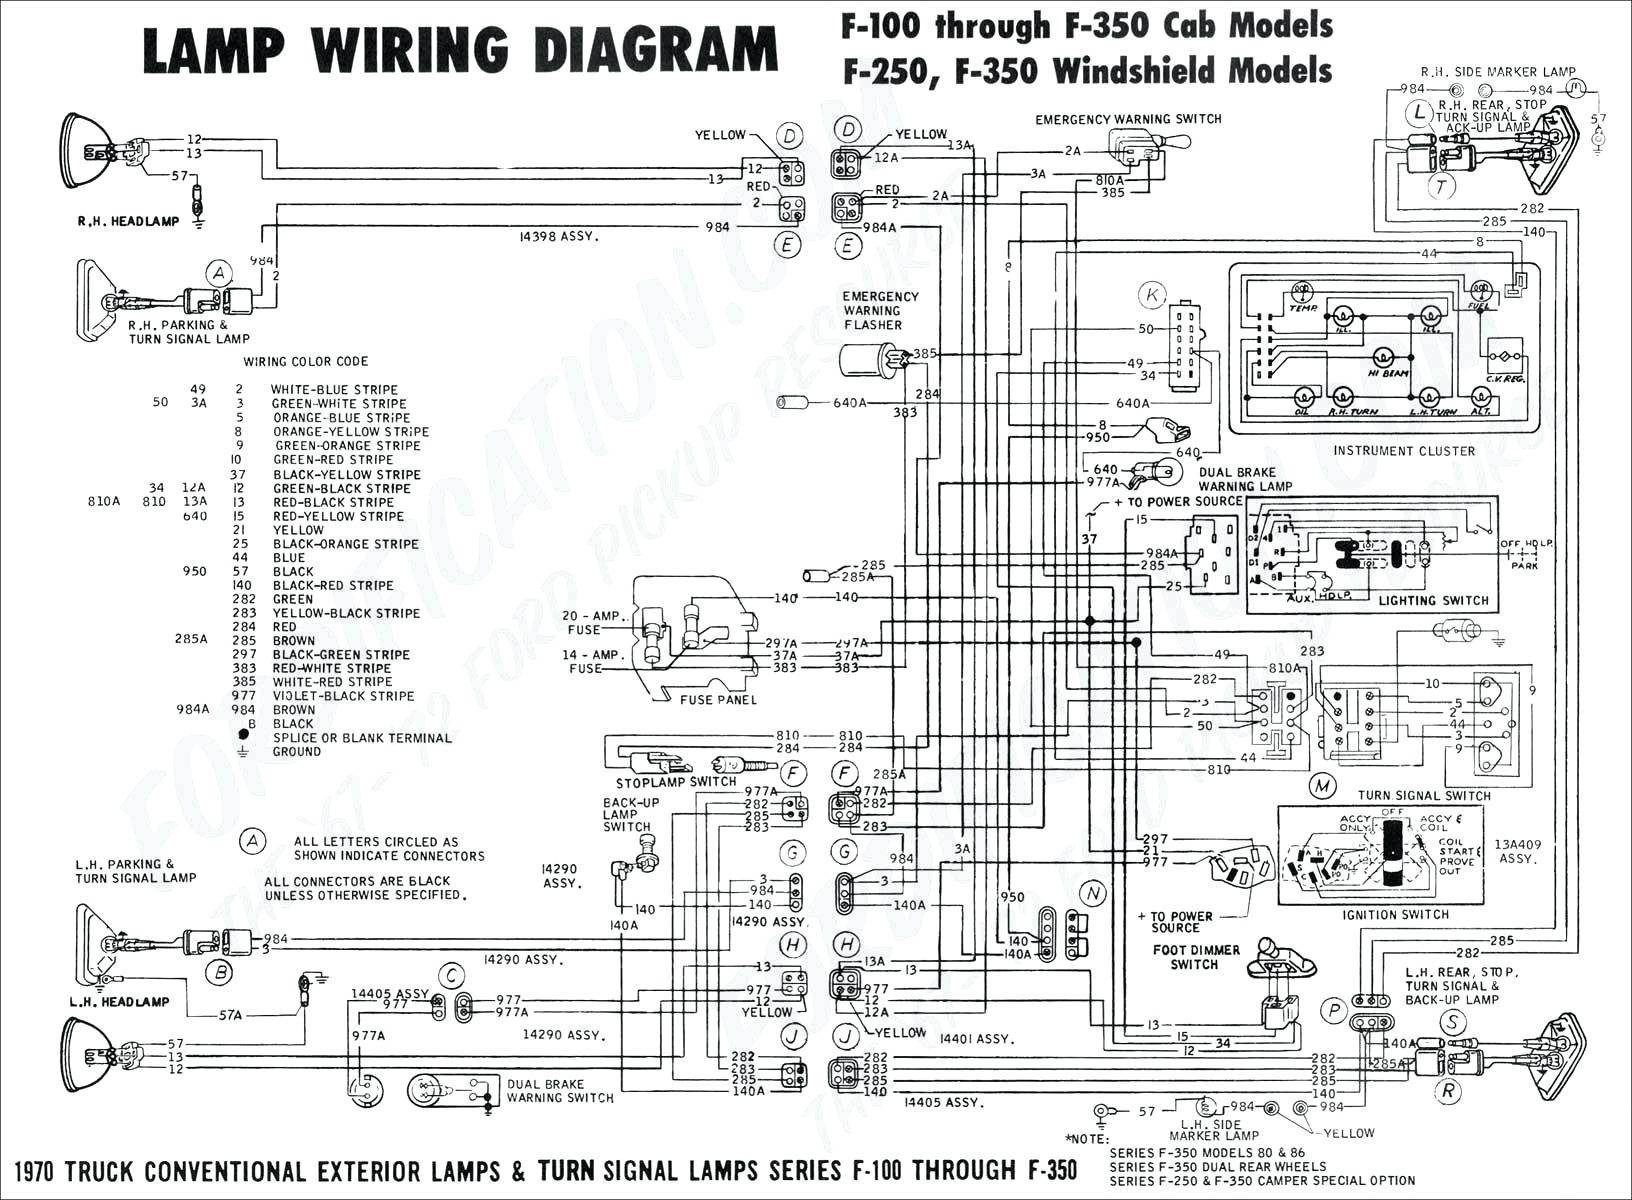 2002 mitsubishi galant engine diagram mitsubishi space wagon wiring diagram trusted wiring diagrams e280a2 of 2002 mitsubishi galant engine diagram